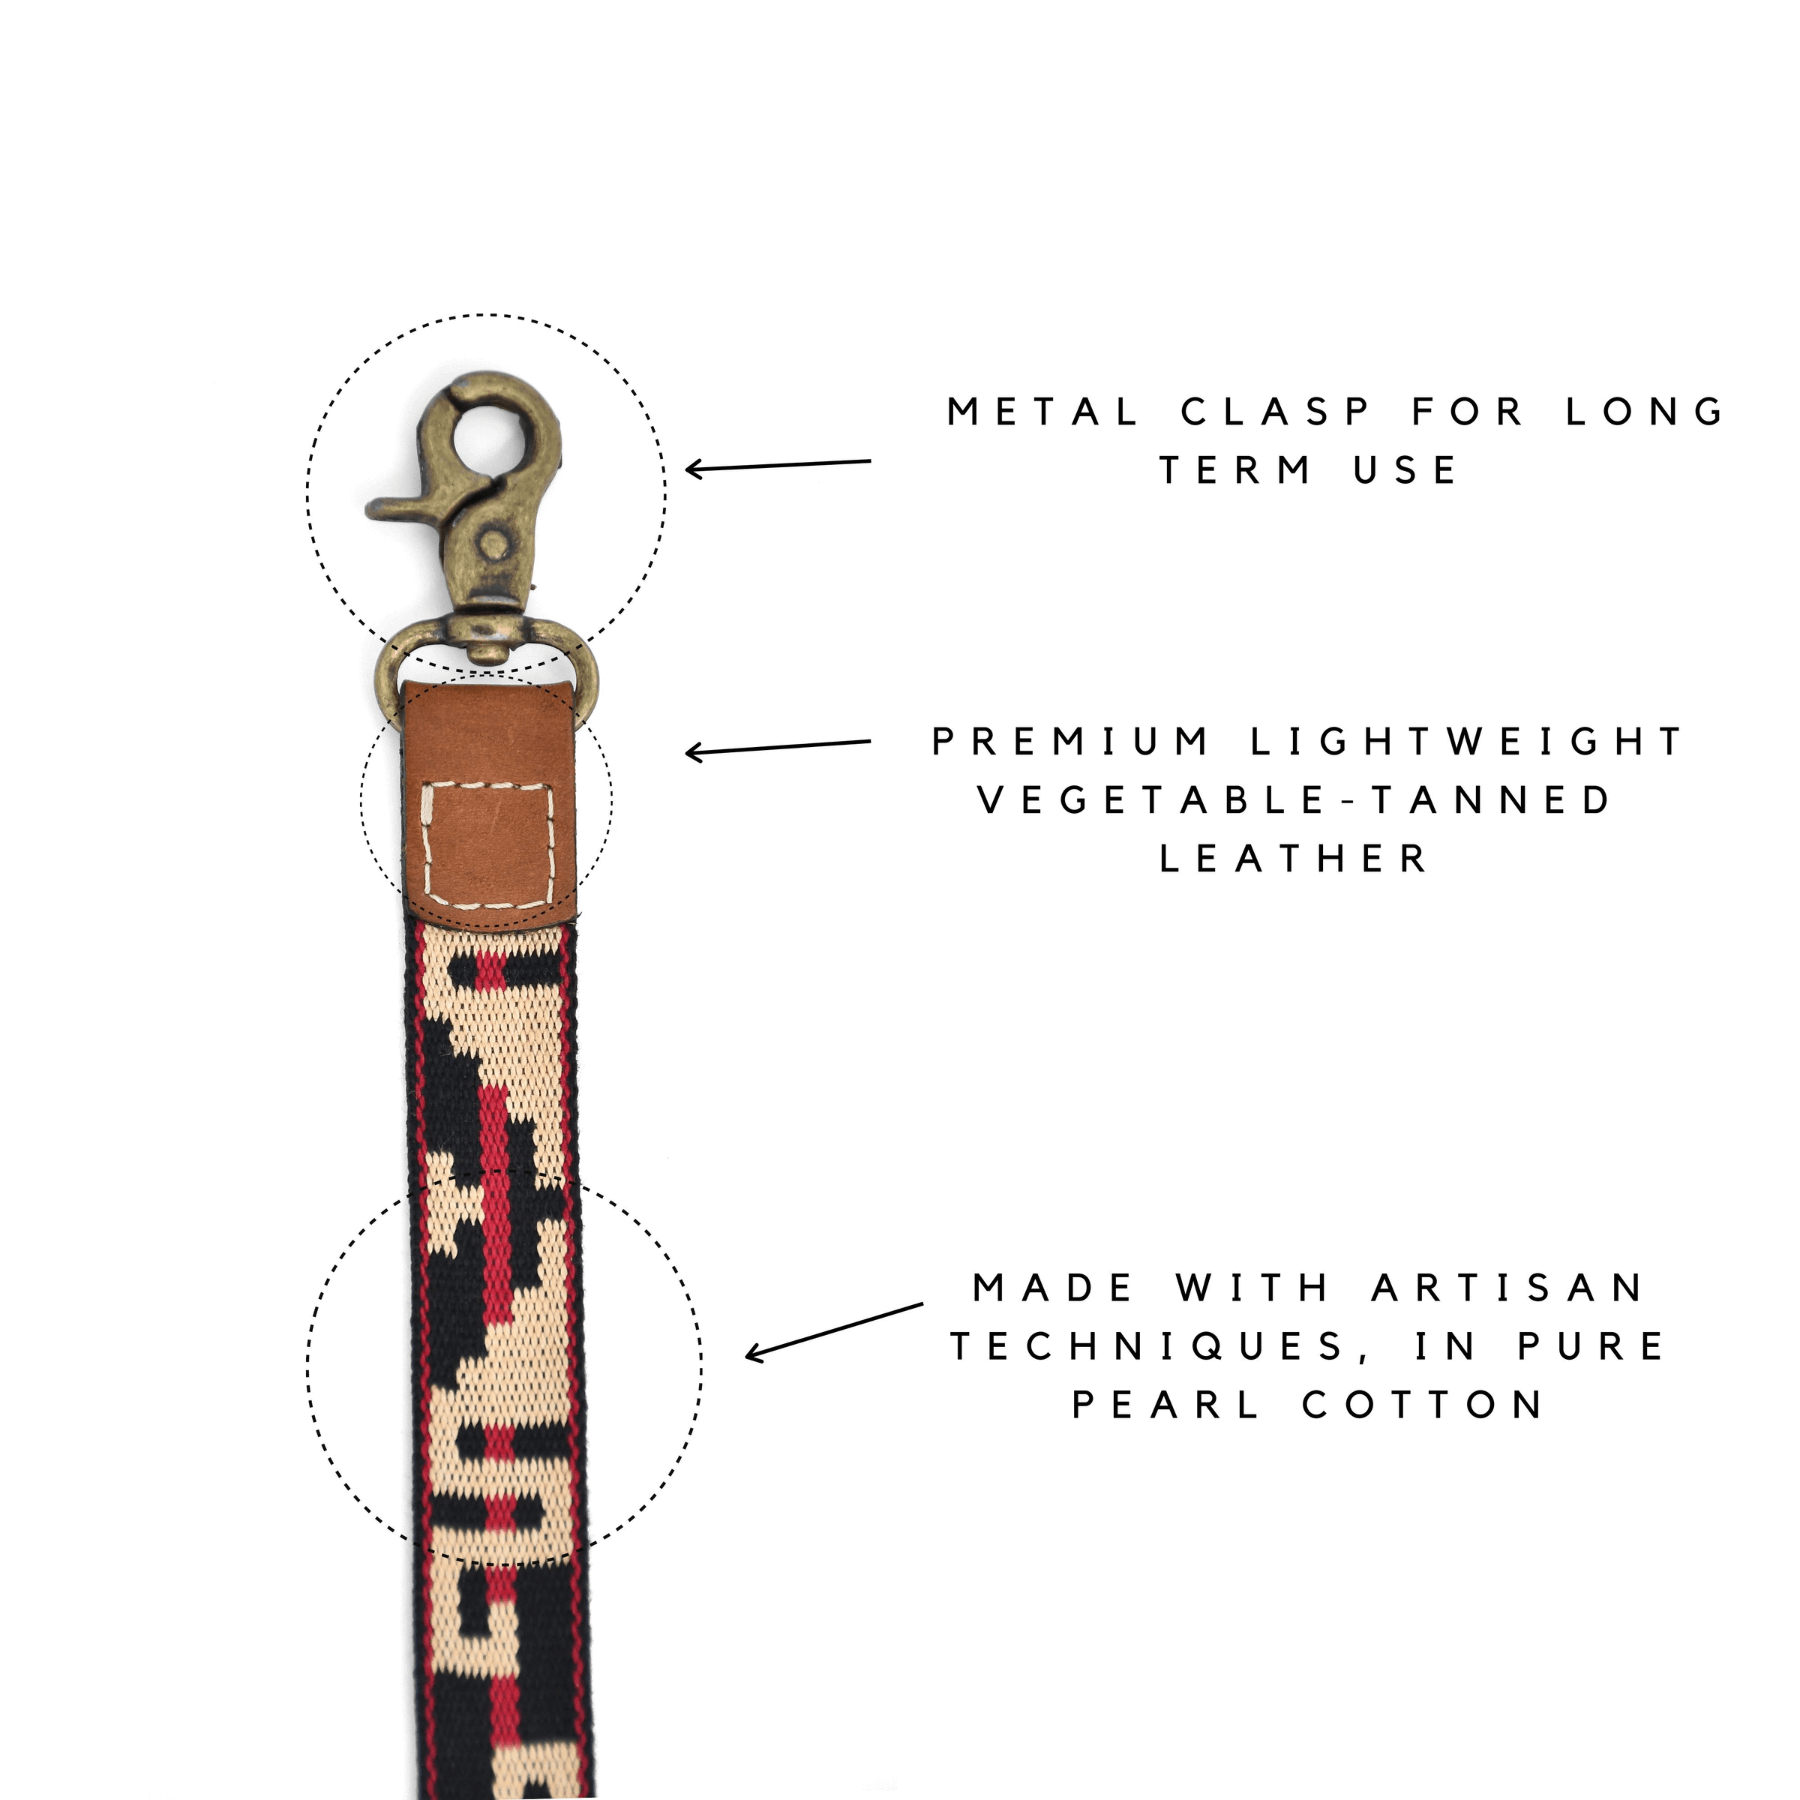 Gaucholife Keychain Wrist Lanyard (Tribal)